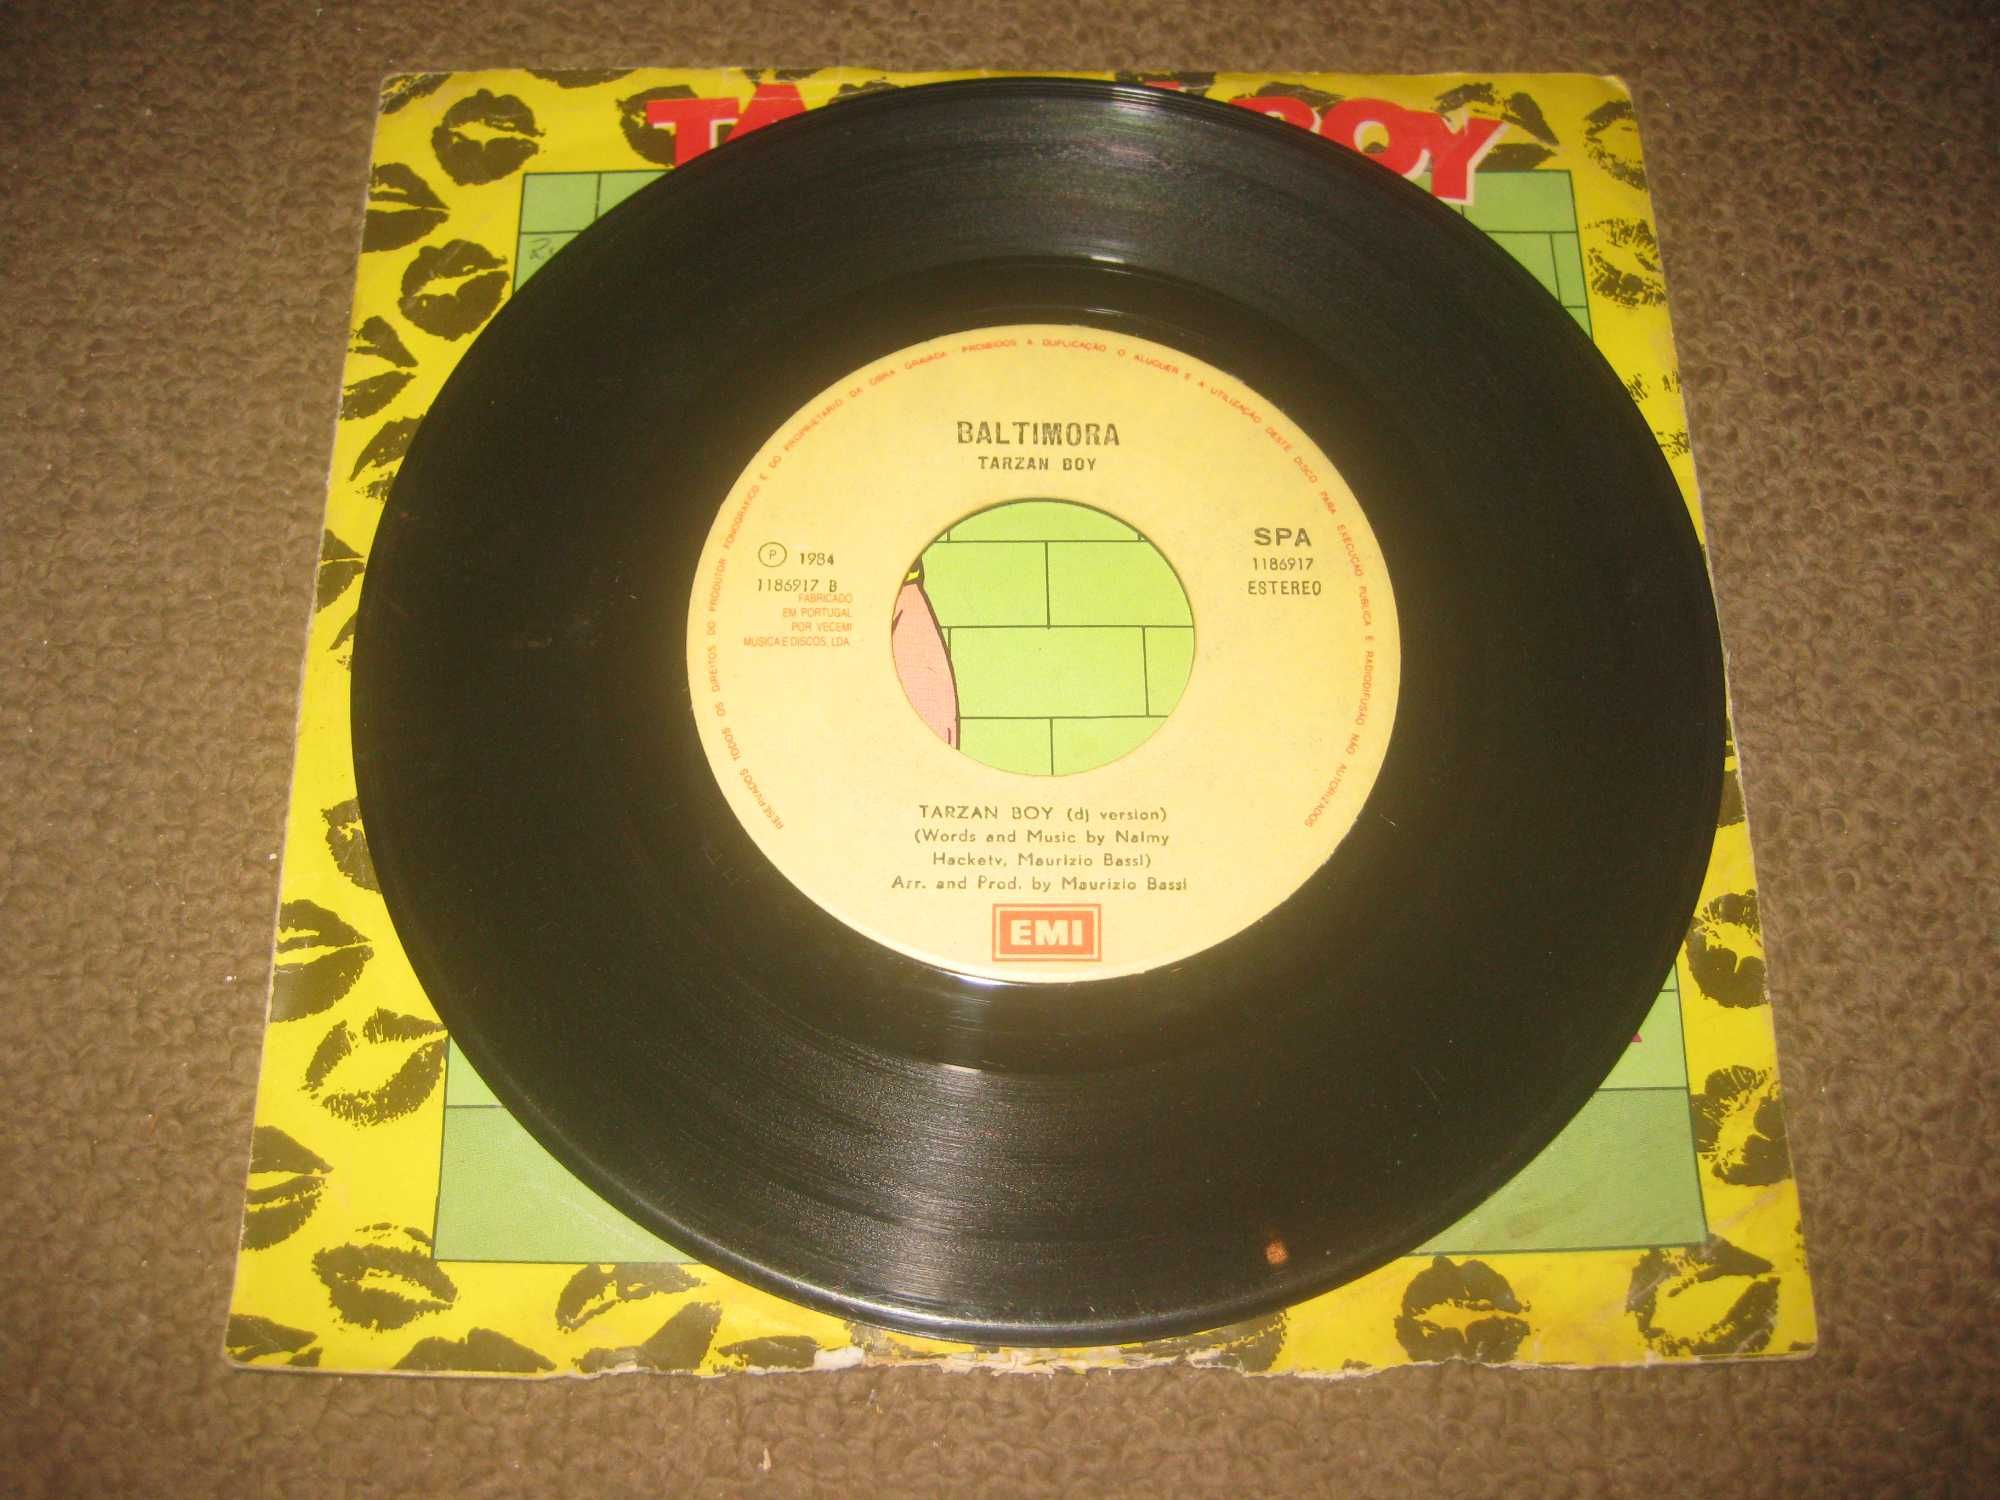 Vinil Single 45 rpm dos Baltimora "Tarzan Boy"